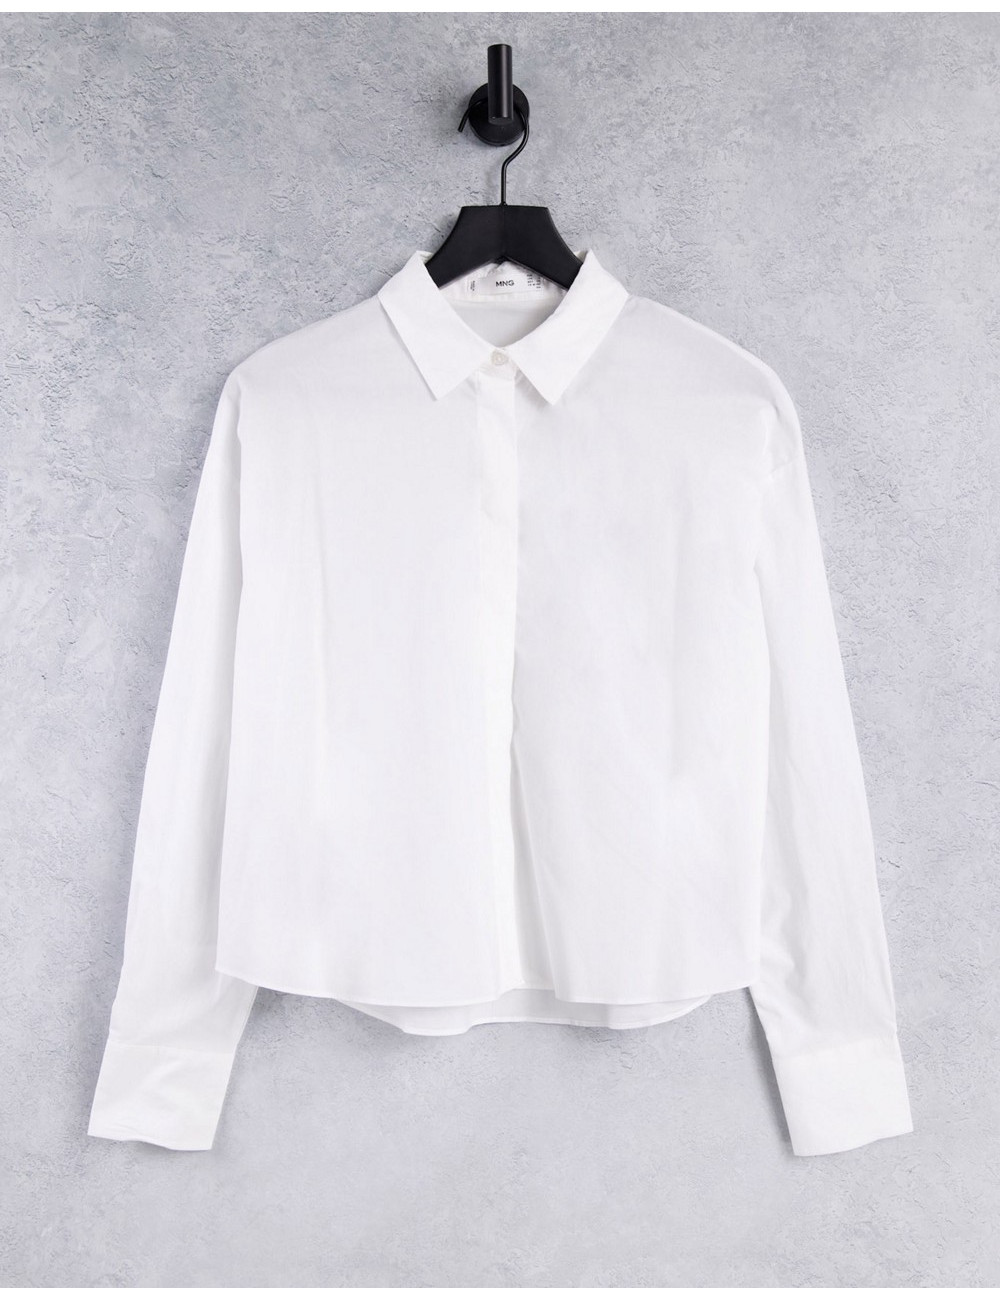 Mango poplin shirt in white